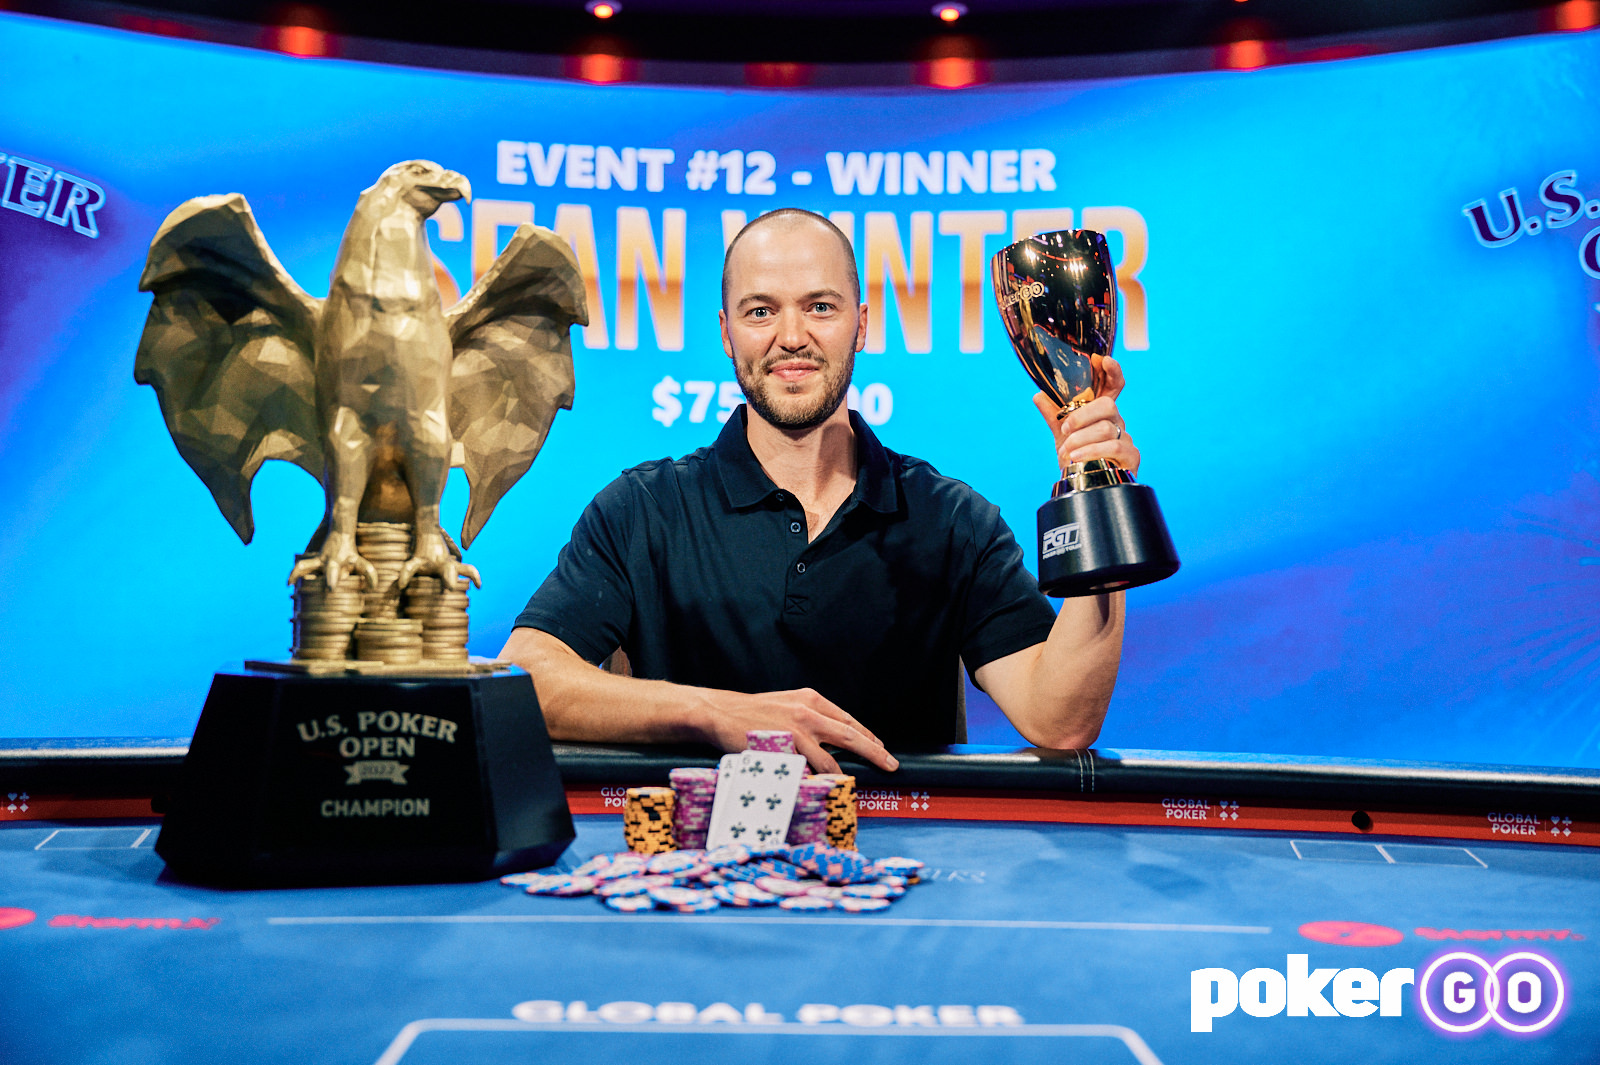 Sean Winter wins Event #12 at the 2022 U.S. Poker Open